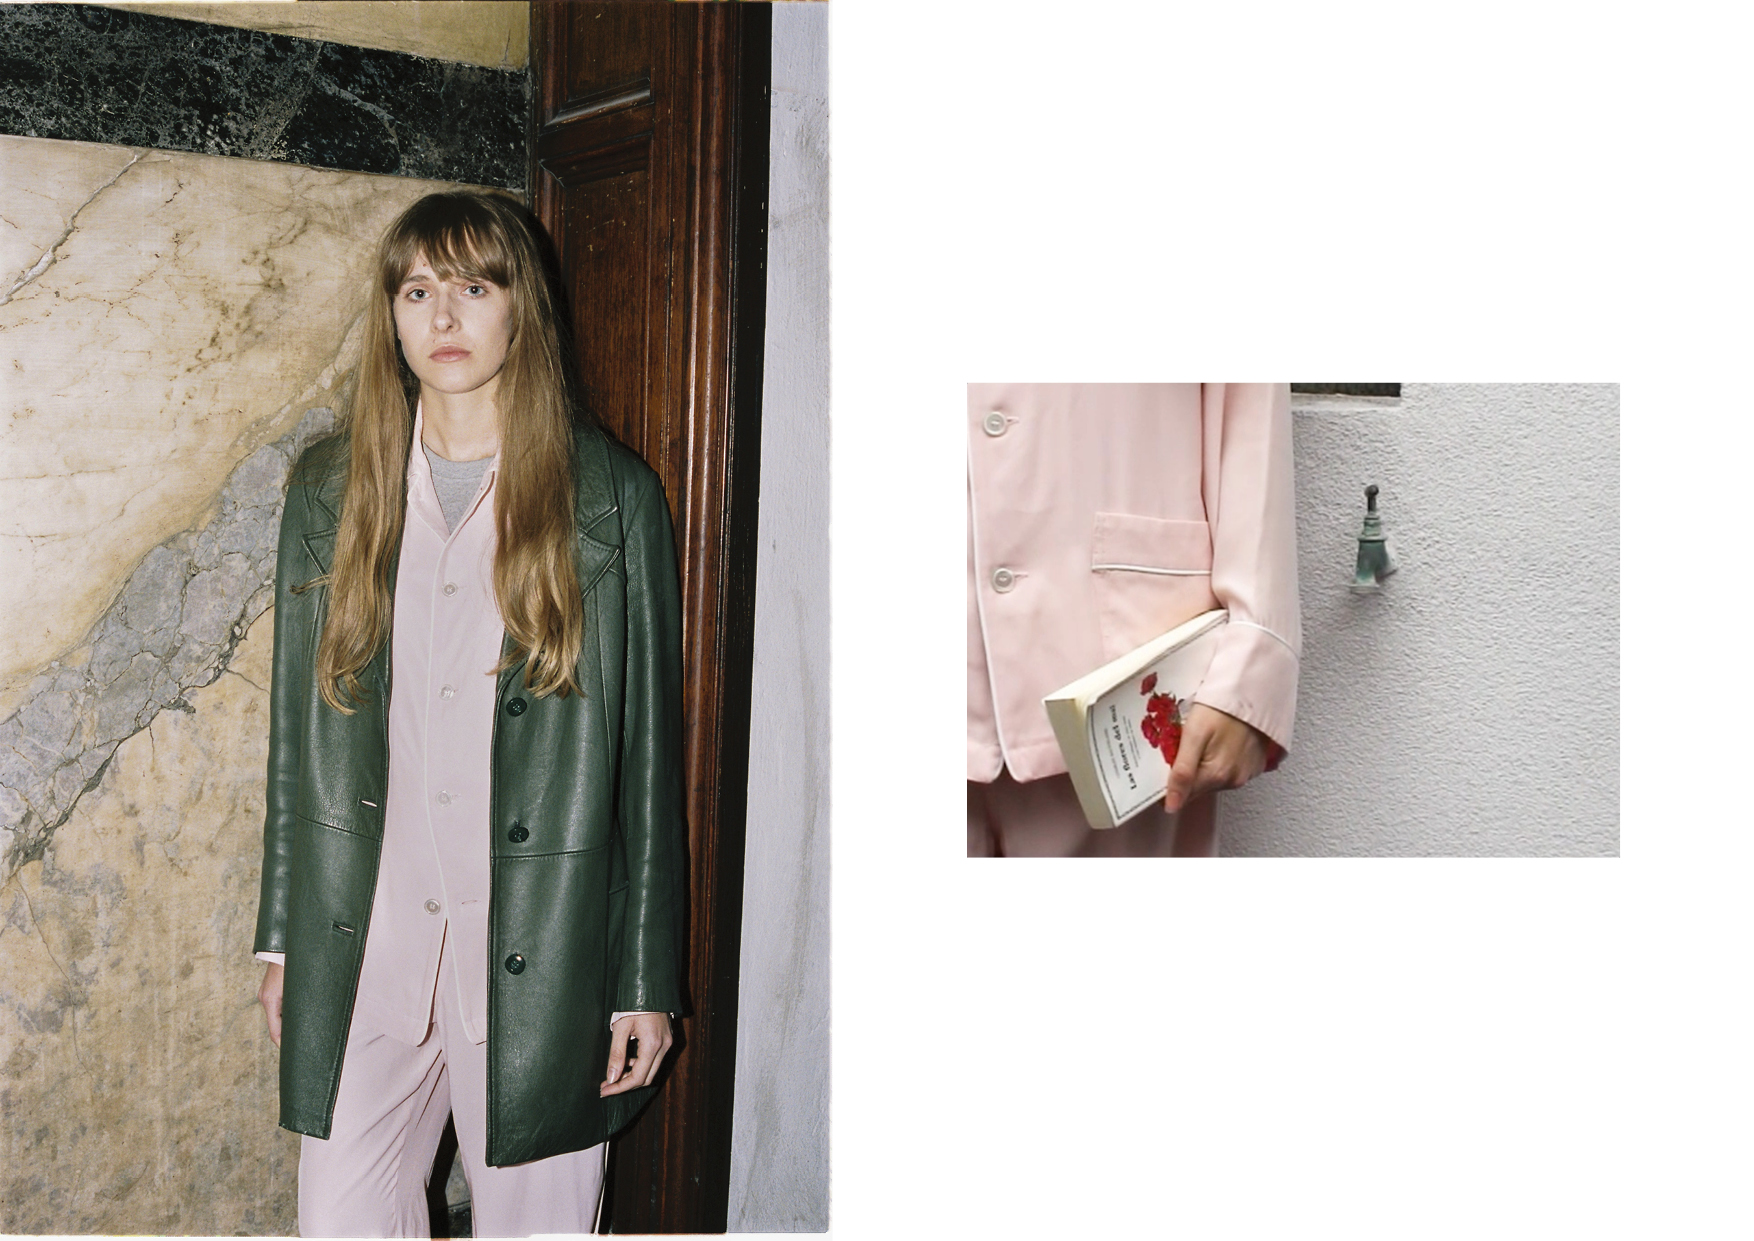  Silk nightwear shirt and trousers OLATZ, cotton t-shirt LEVI’S, green leather jacket stylist archive 